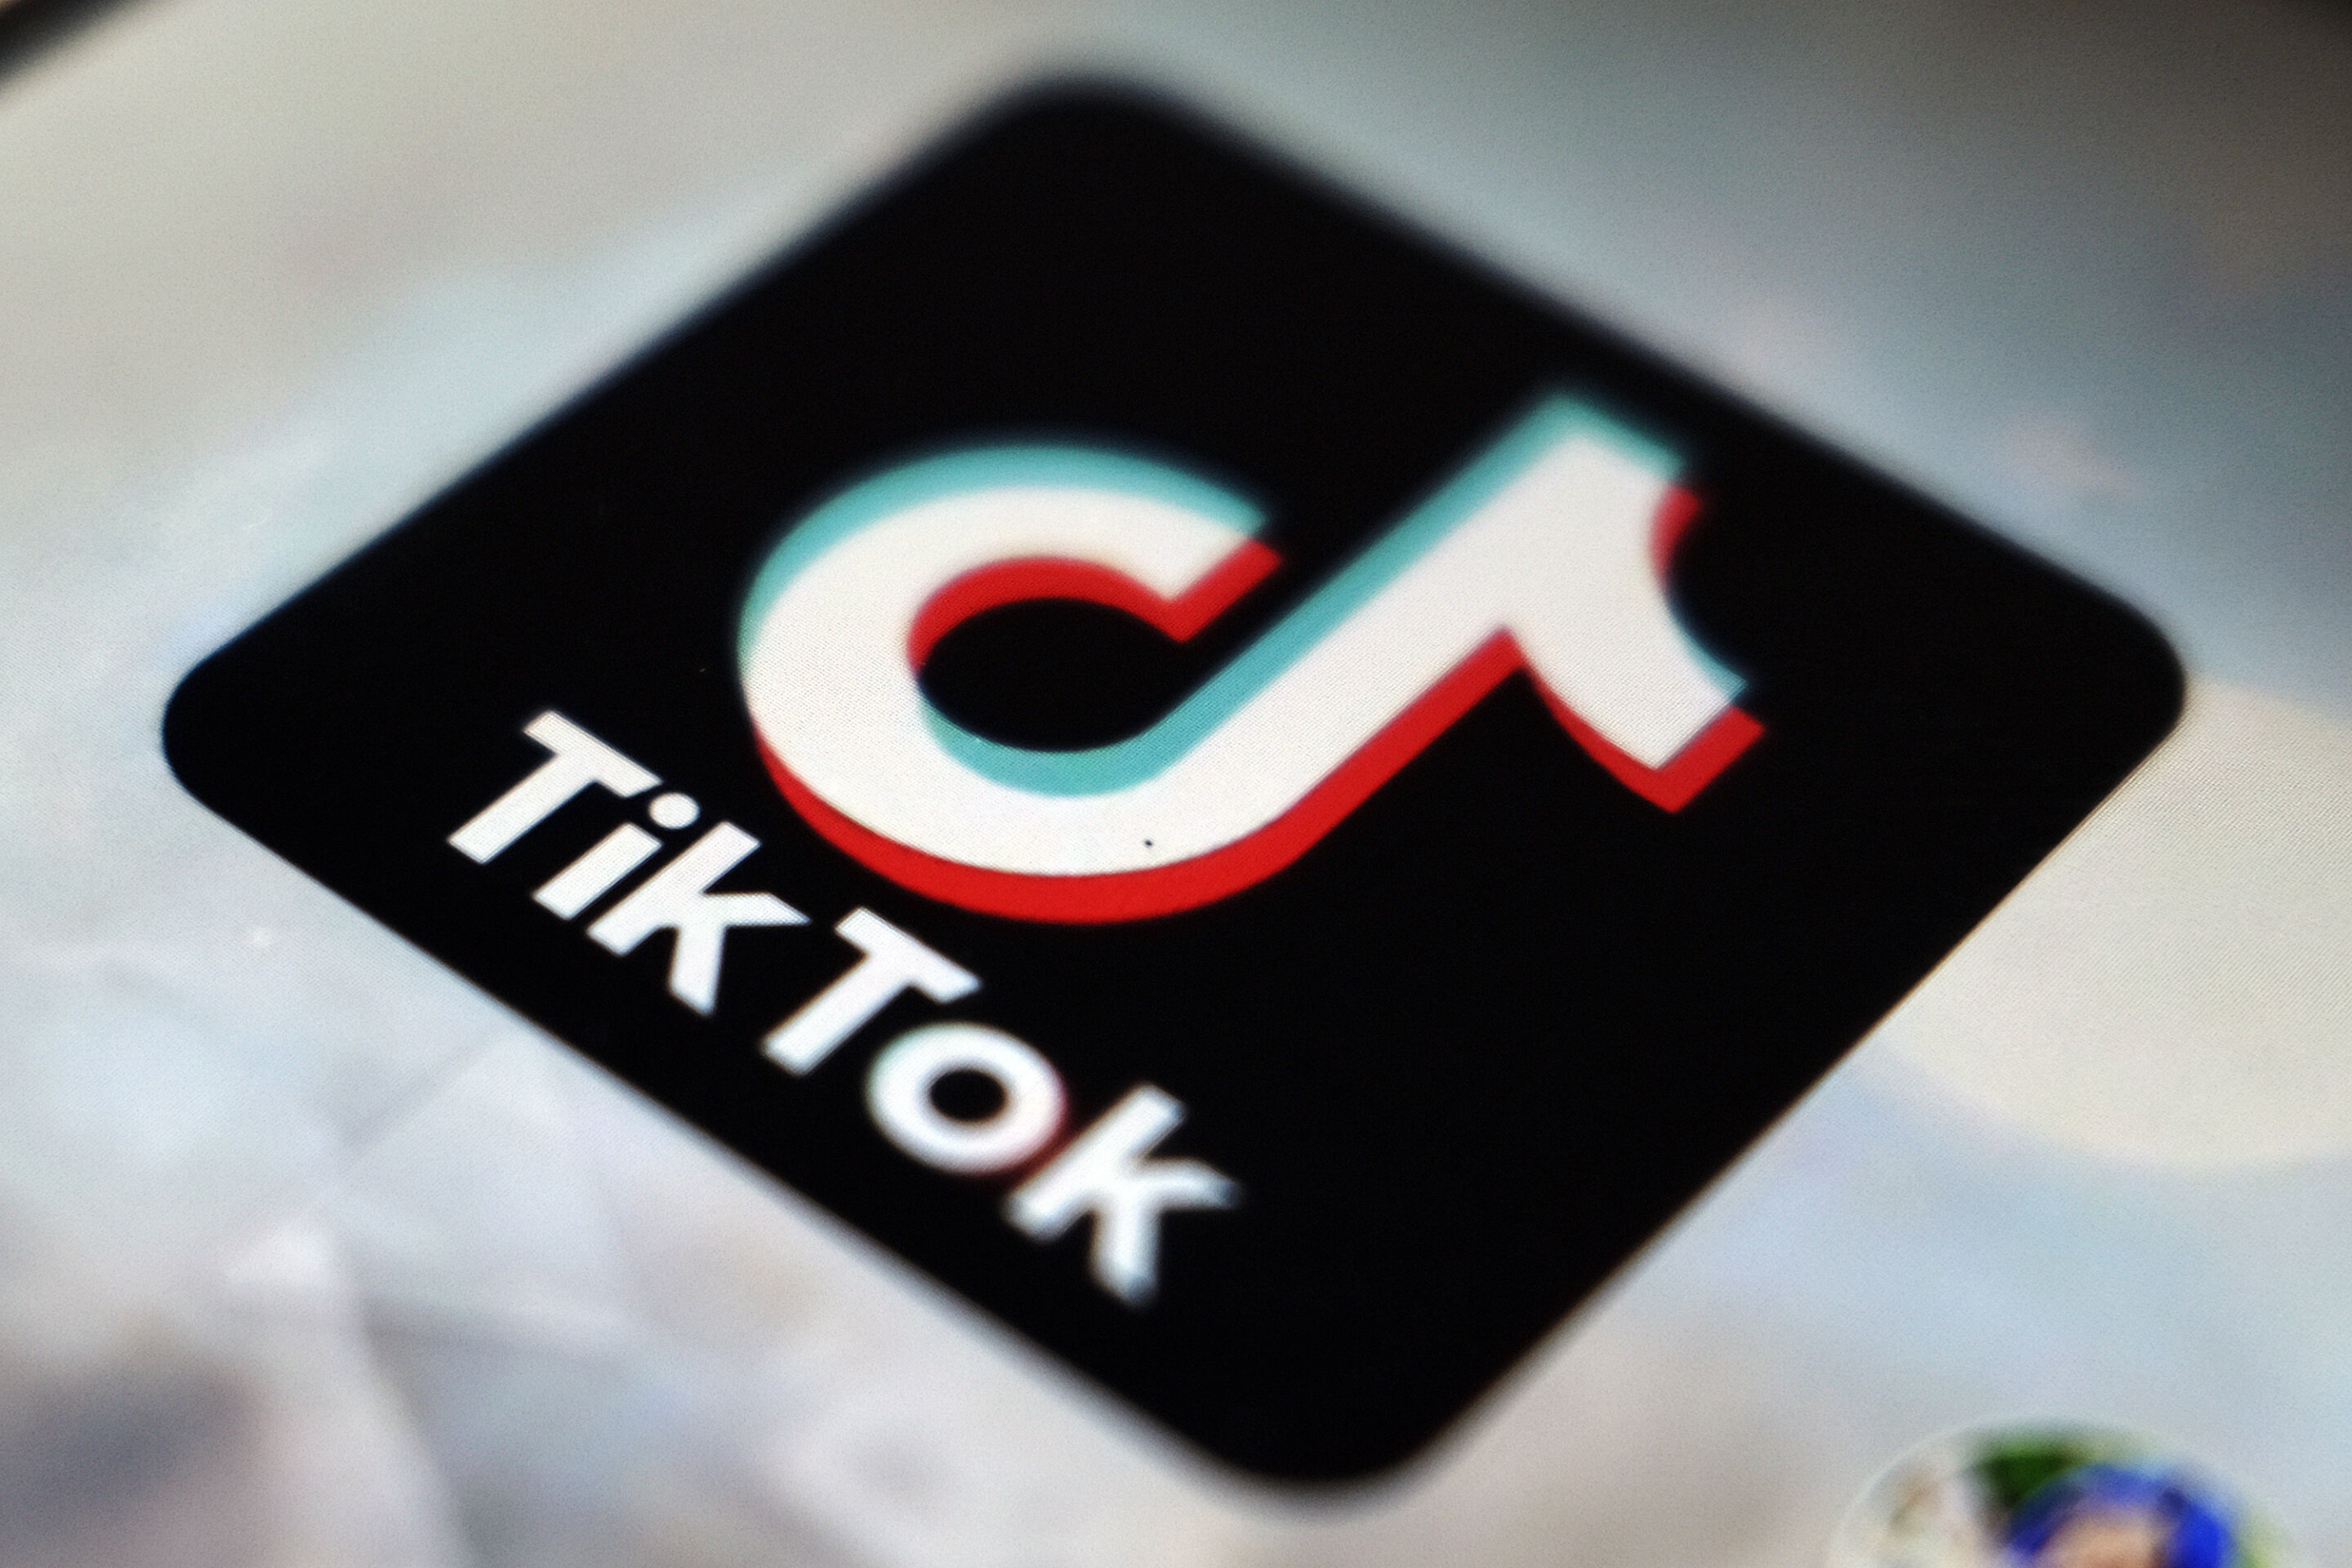 TikTok seeks ‘partner’ in Europe to offer security reassurances